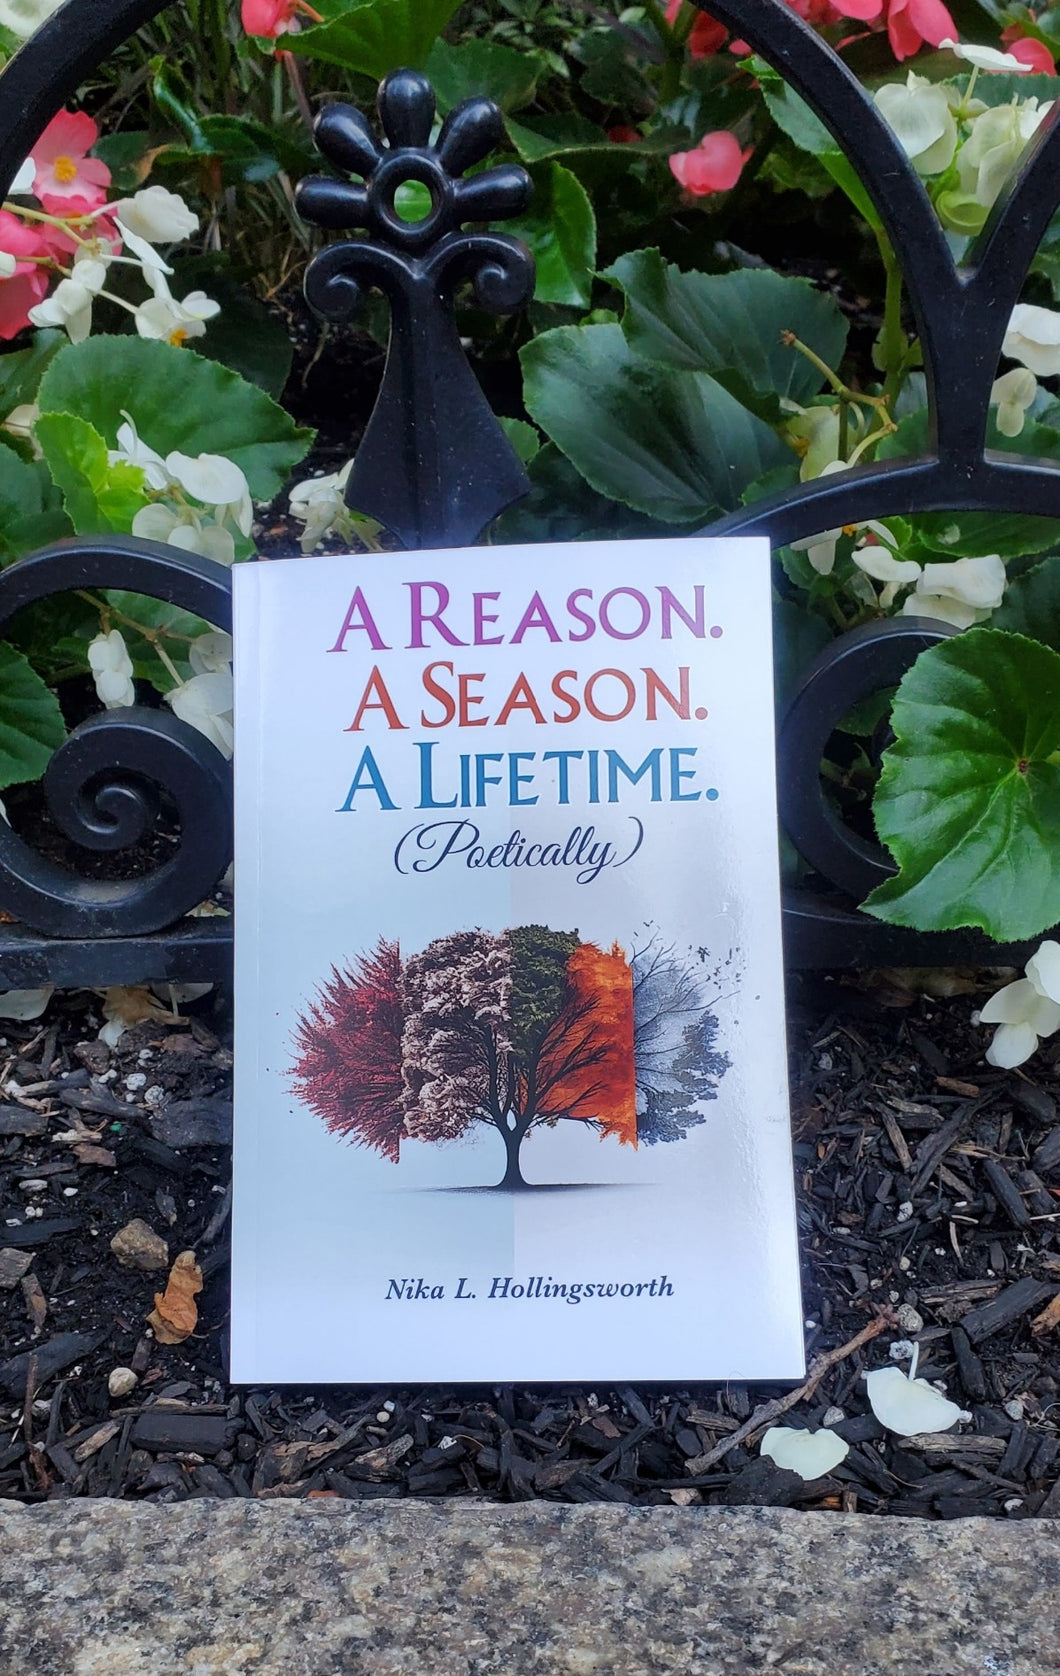 A Reason.  A Season.  A Lifetime. (Poetically)